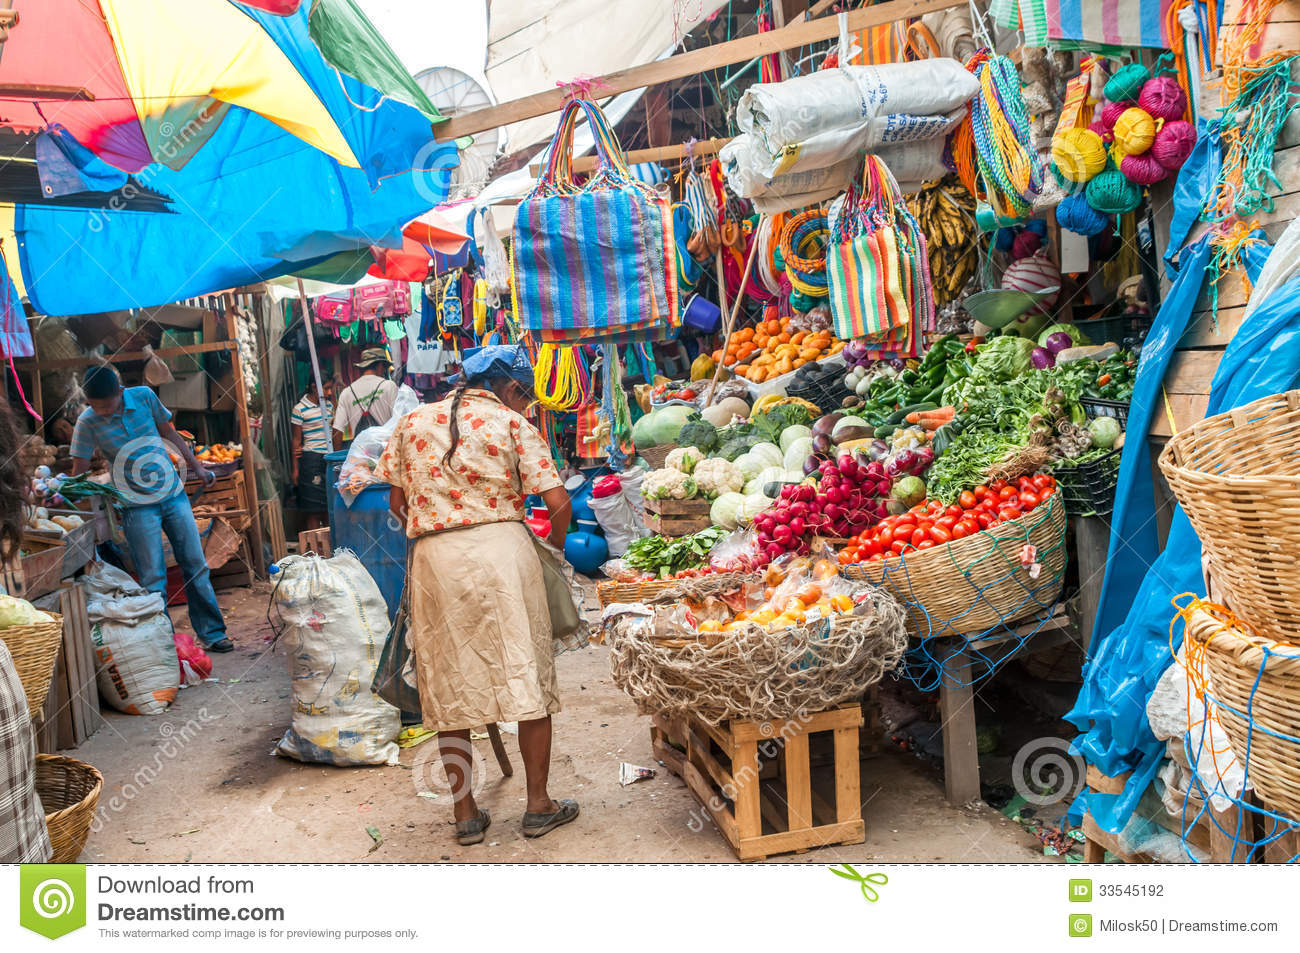 honduras-market-vegetables-copan-33545192.jpg